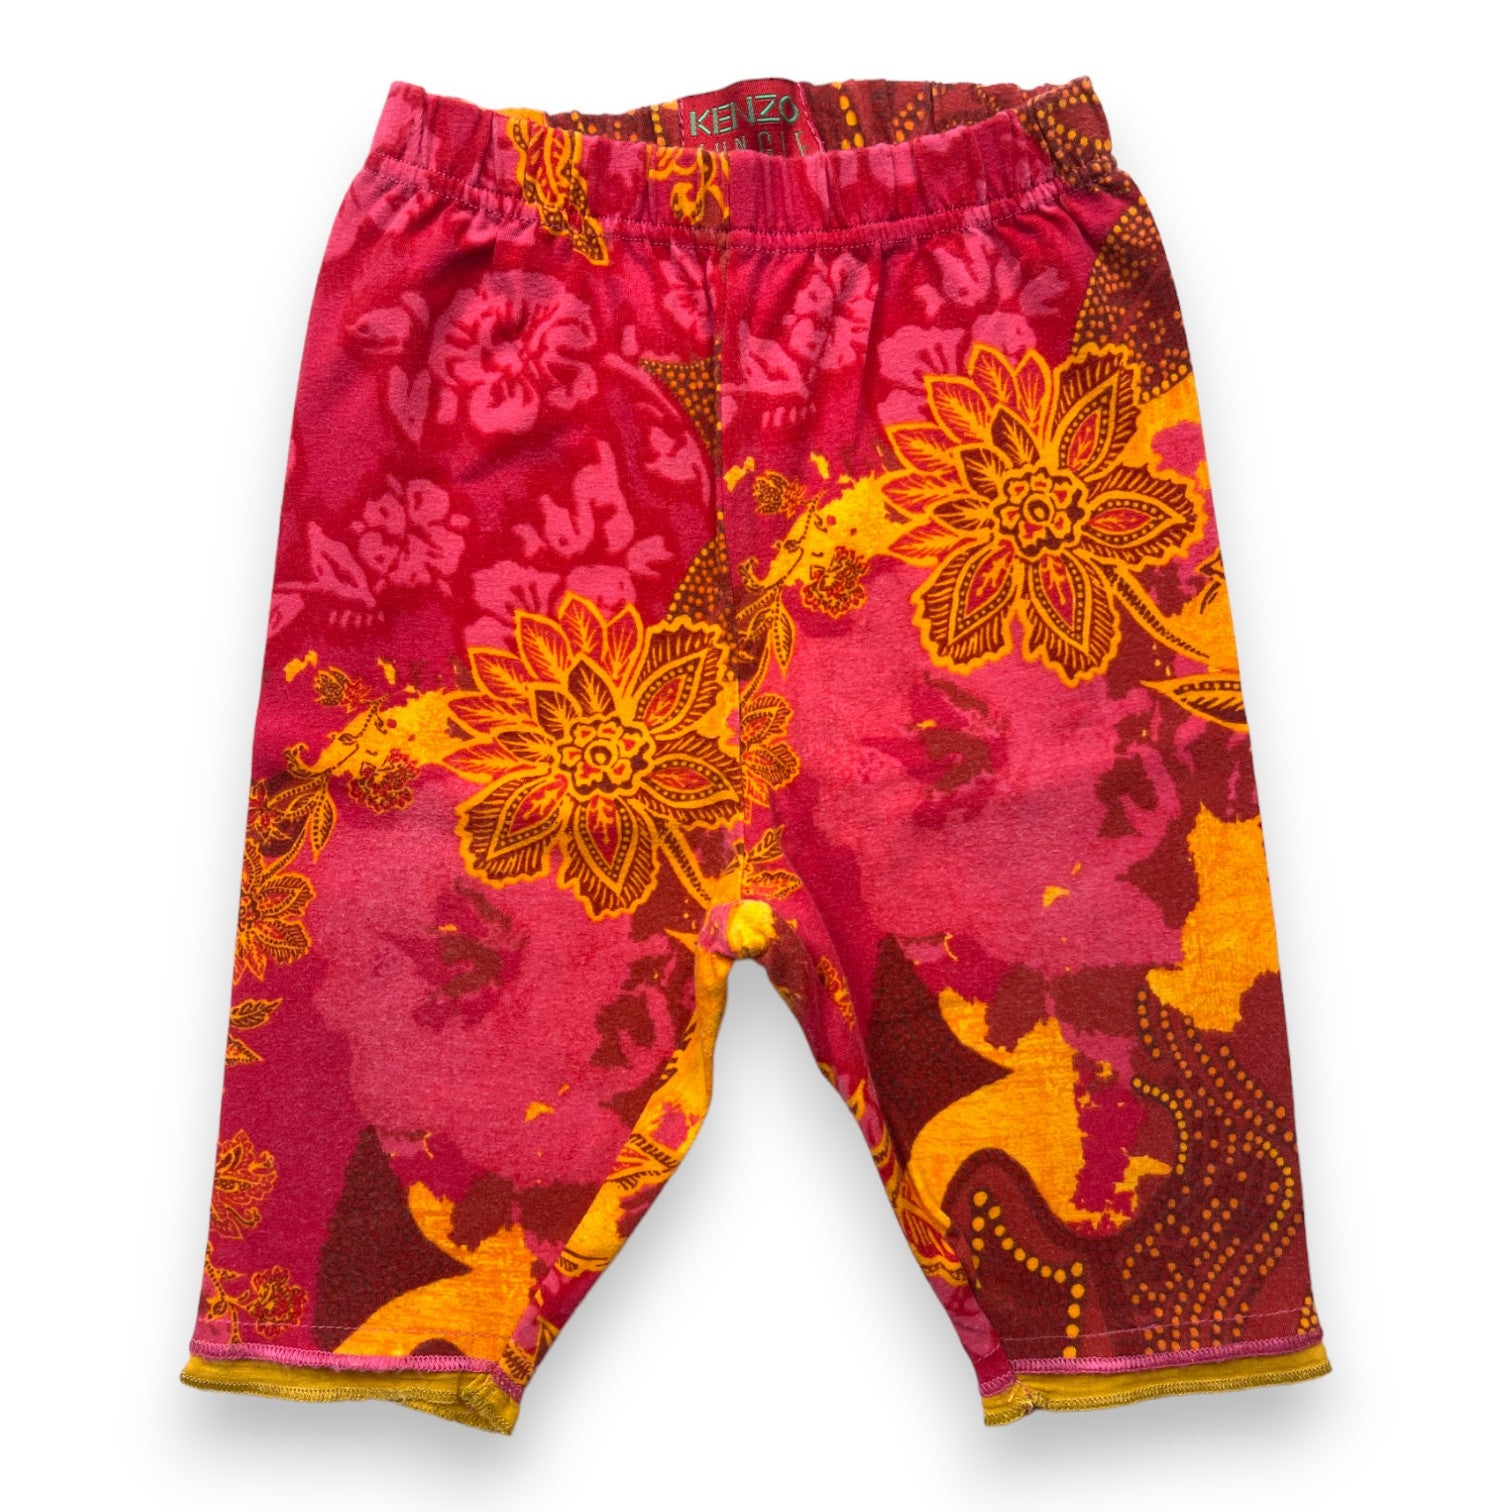 KENZO - Pantalon rouge et orange à motifs - 6 mois